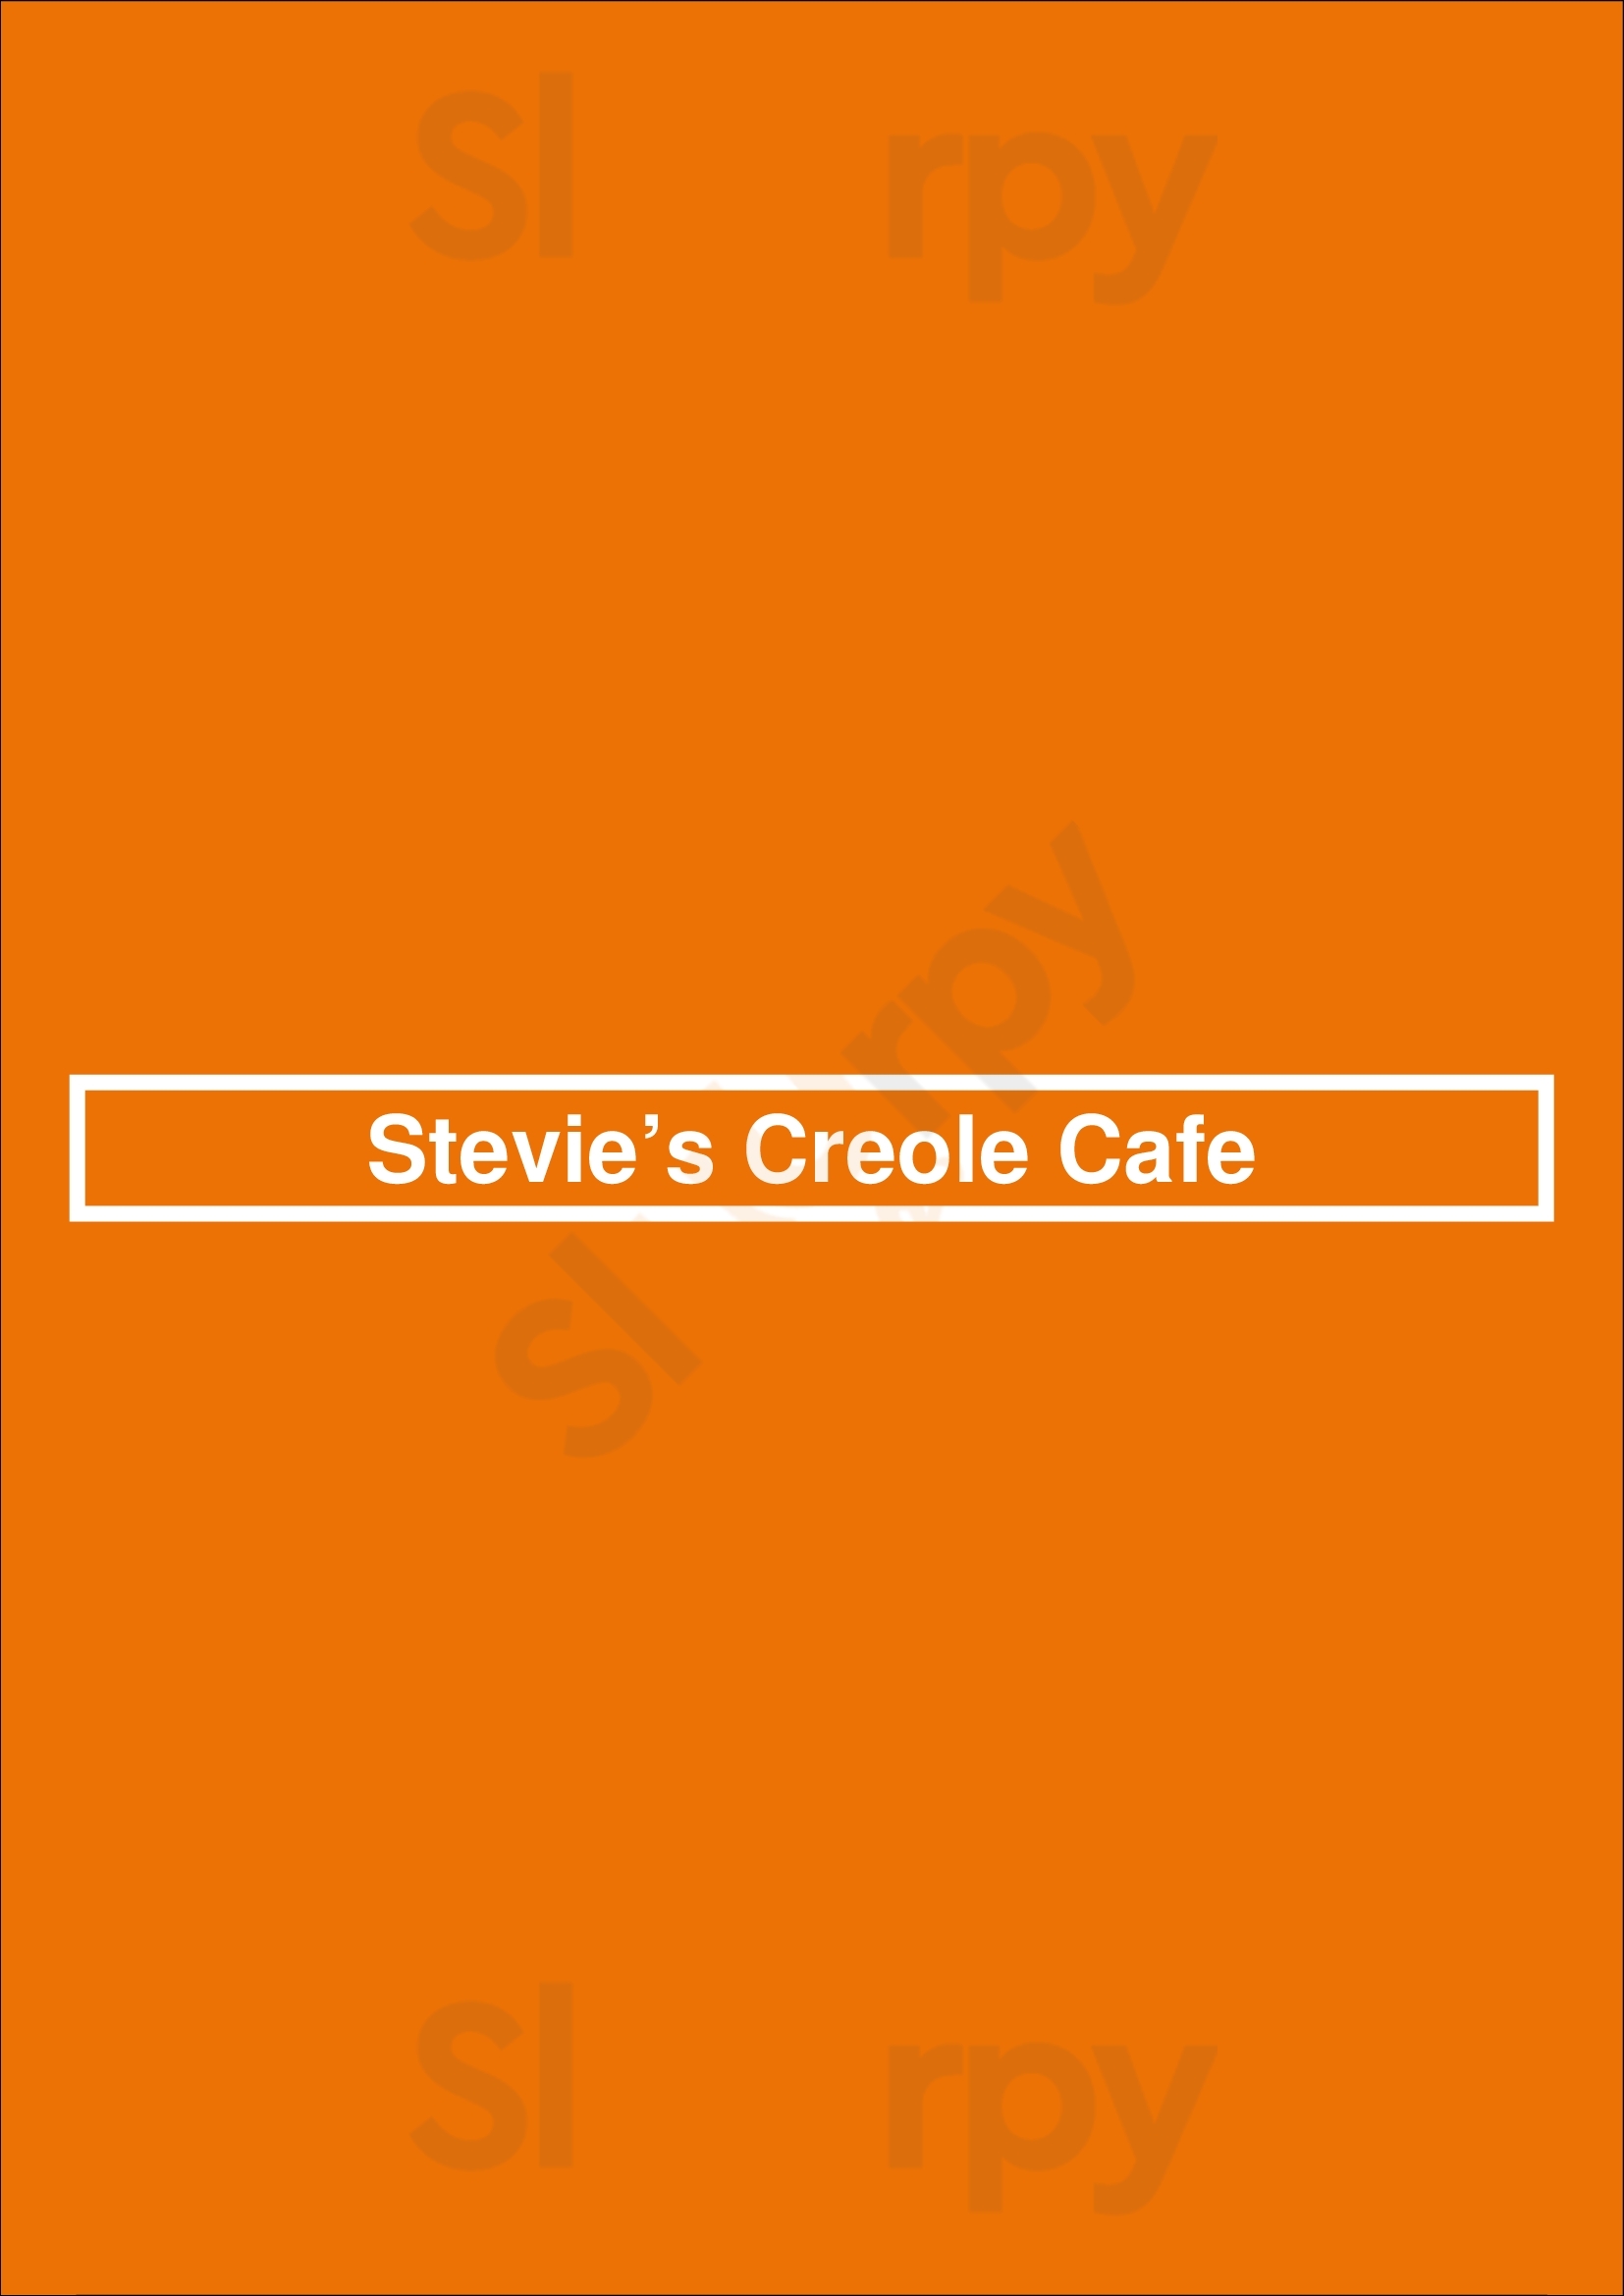 Stevie’s Creole Cafe Los Angeles Menu - 1